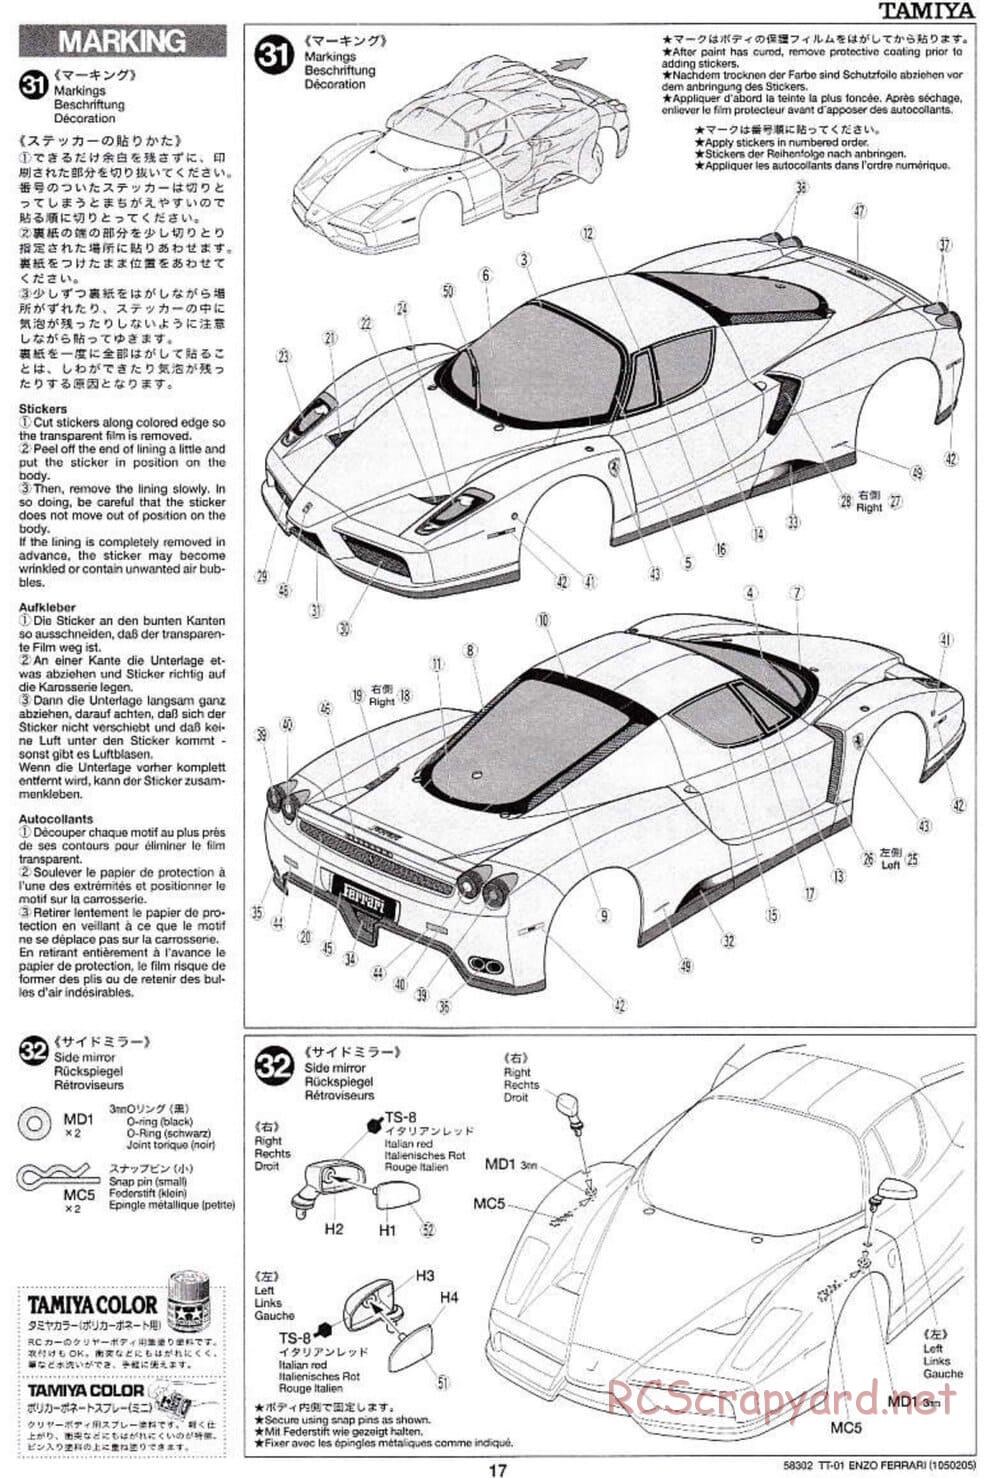 Tamiya - Enzo Ferrari - TT-01 Chassis - Manual - Page 17